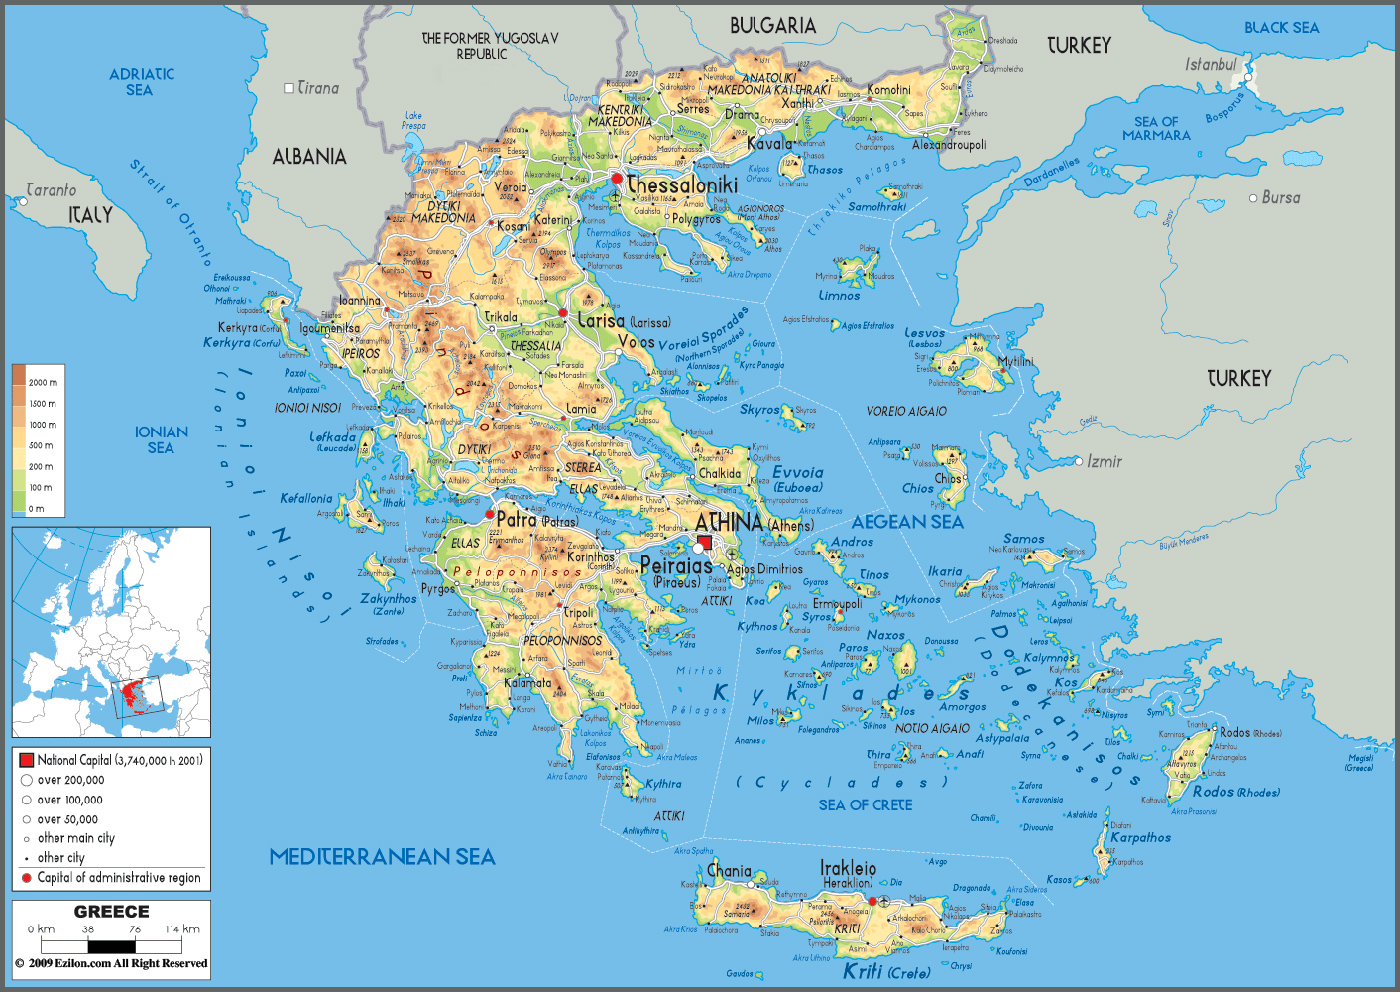 Greece-map